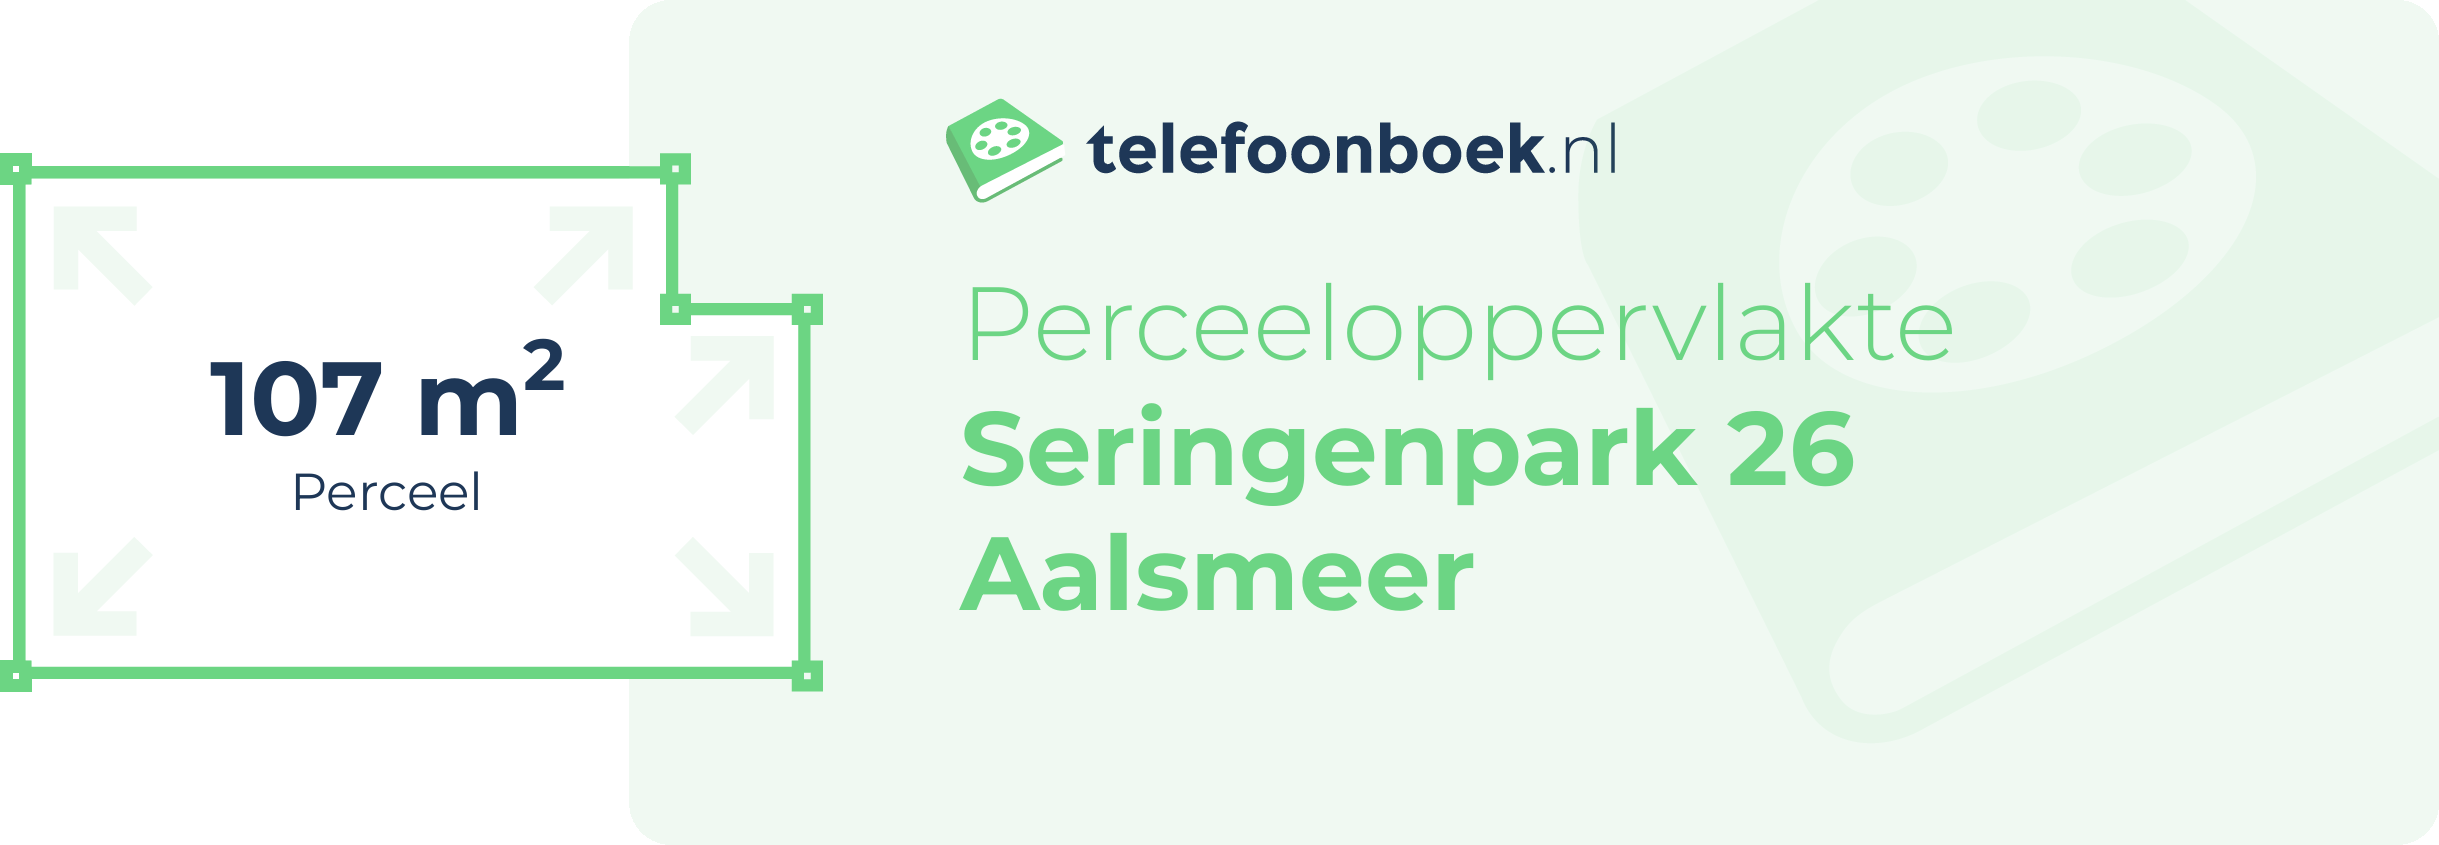 Perceeloppervlakte Seringenpark 26 Aalsmeer